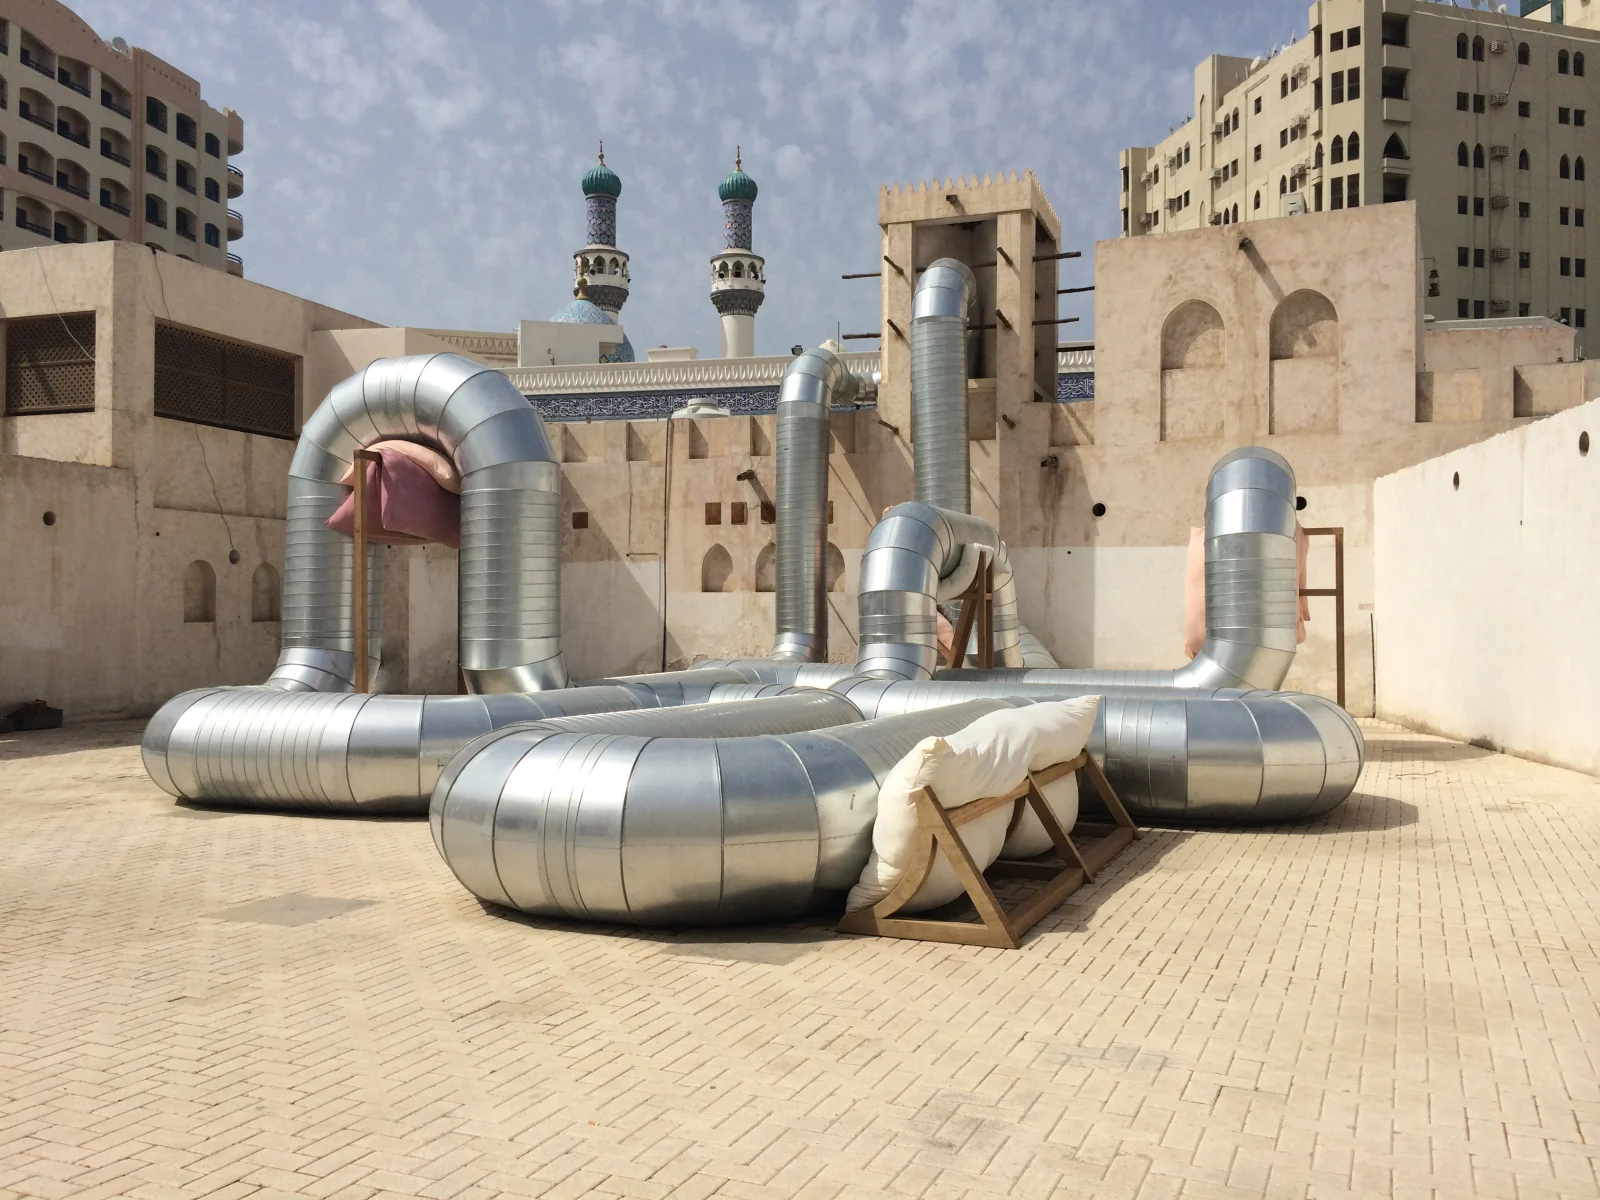 <p>‘Homeostasis’, March Project, Sharjah Art Foundation, United Arab Emirates, 2014</p>